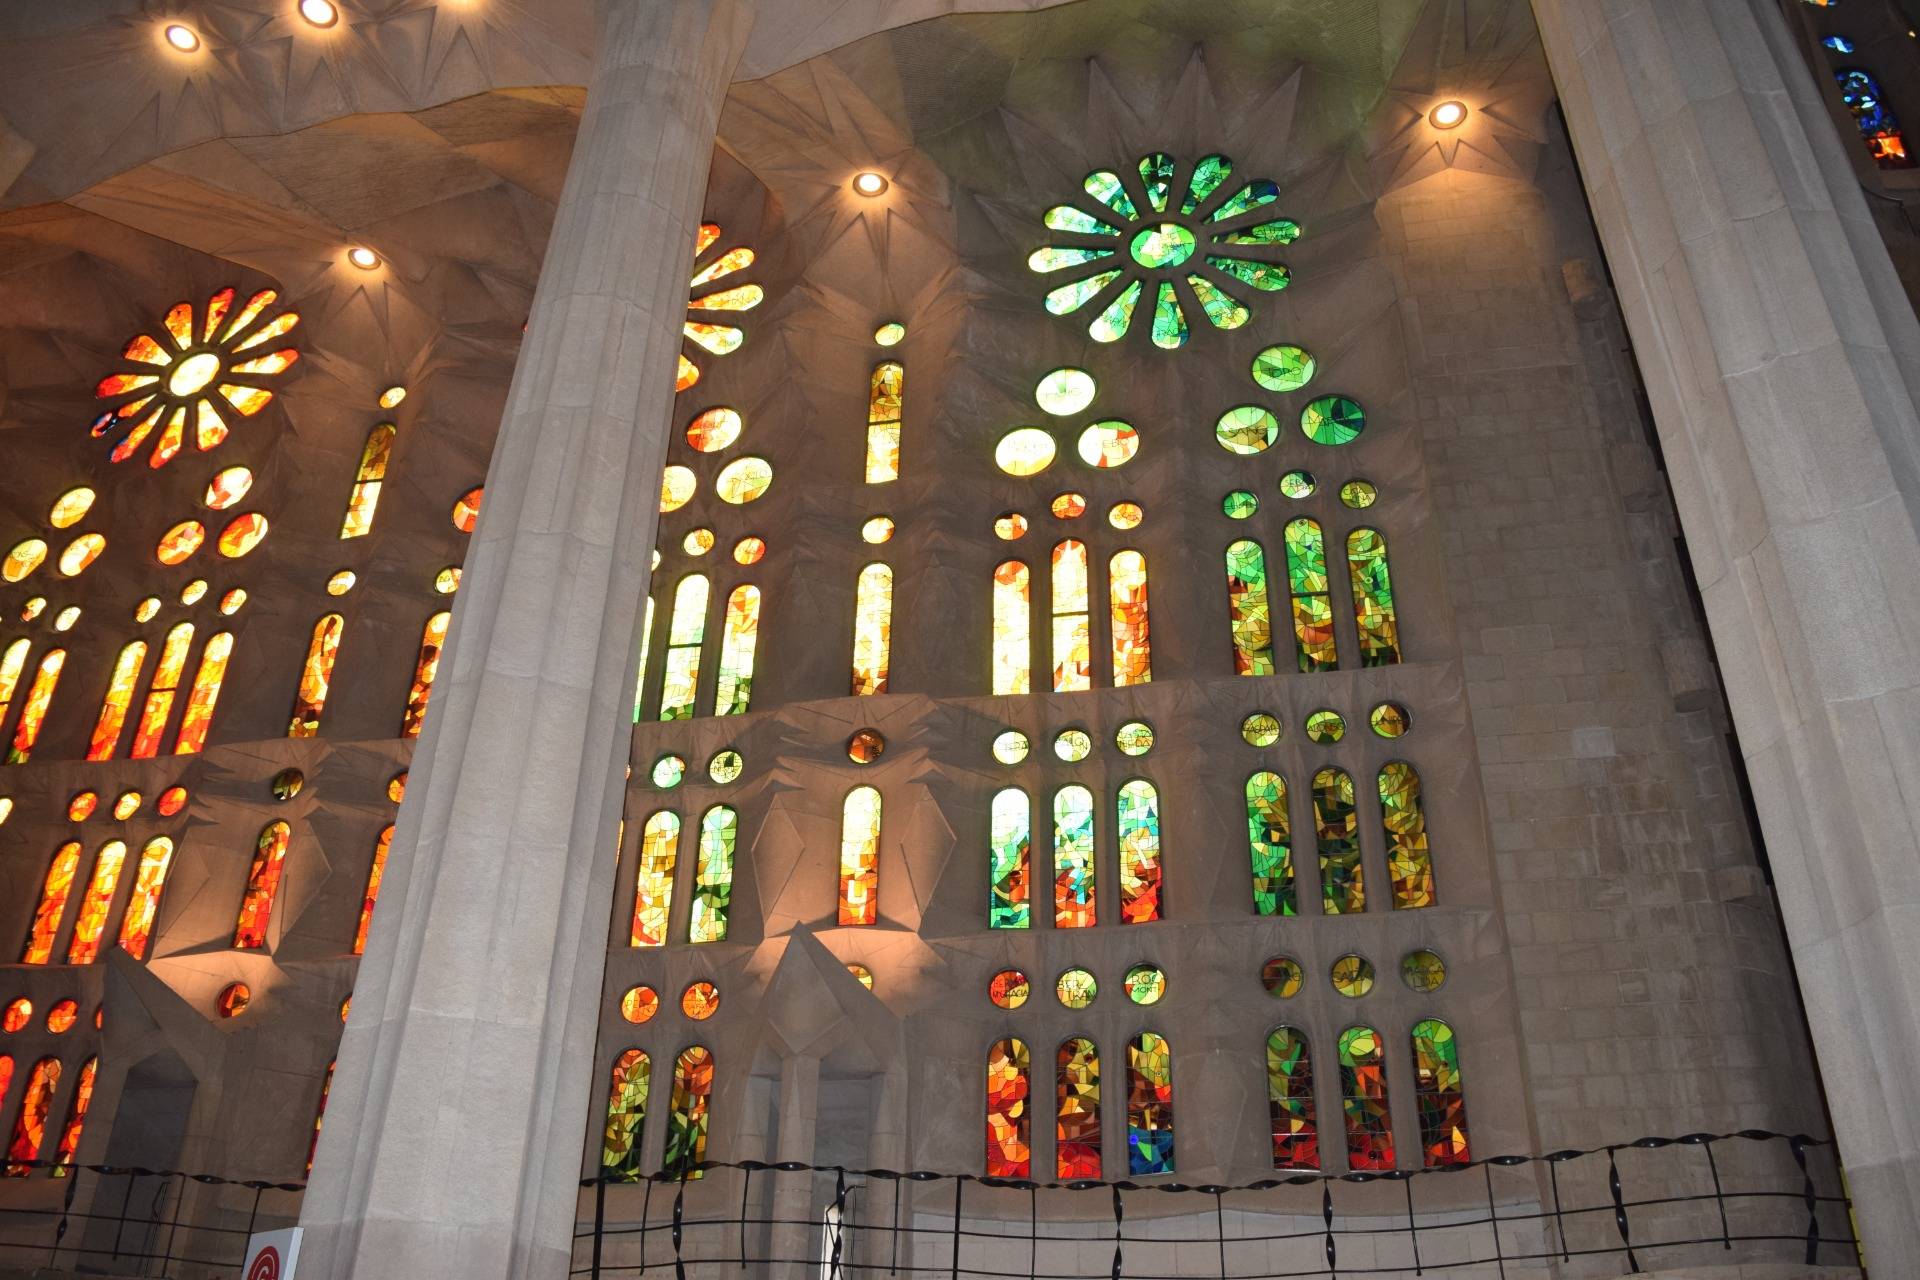 Inside Sagrada Familia